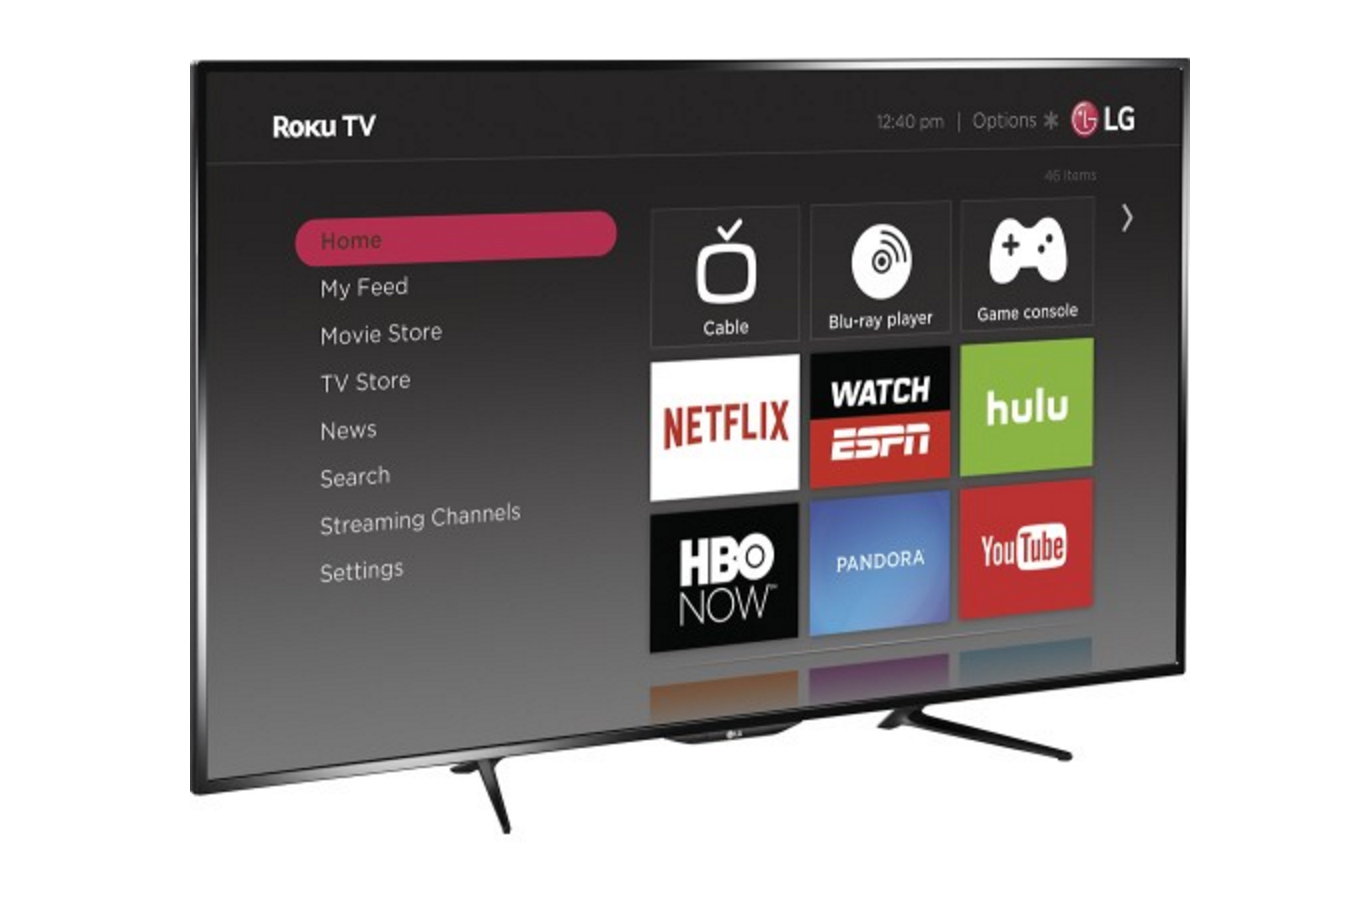 Телевизор LG Life's good Smart TV. LG телевизоры Интерфейс. Магазин приложений LG TV. Телевизор LG С сенсорными кнопками. Приложение для телевизора lg tv